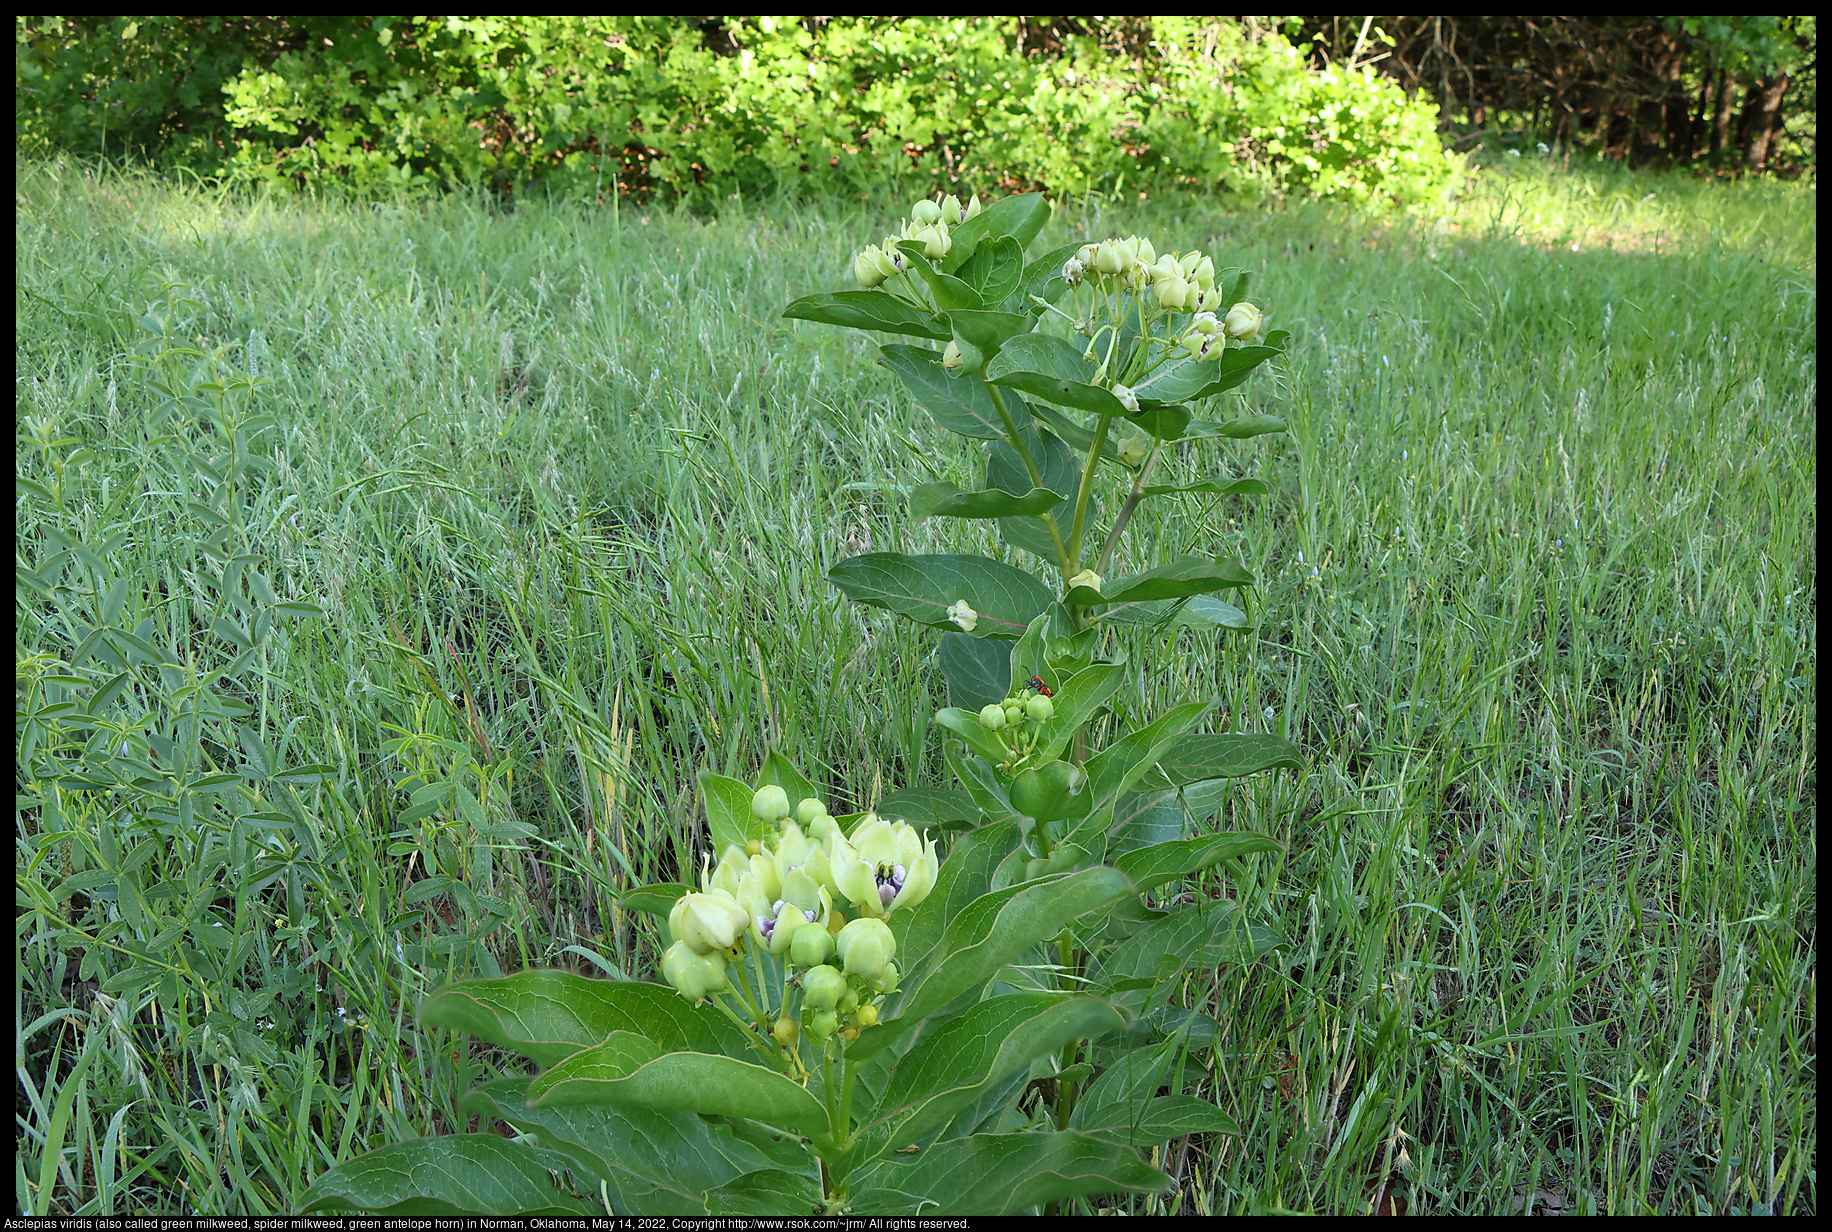 Asclepias viridis (also called green milkweed, spider milkweed, green antelope horn) in Norman, Oklahoma, May 14, 2022